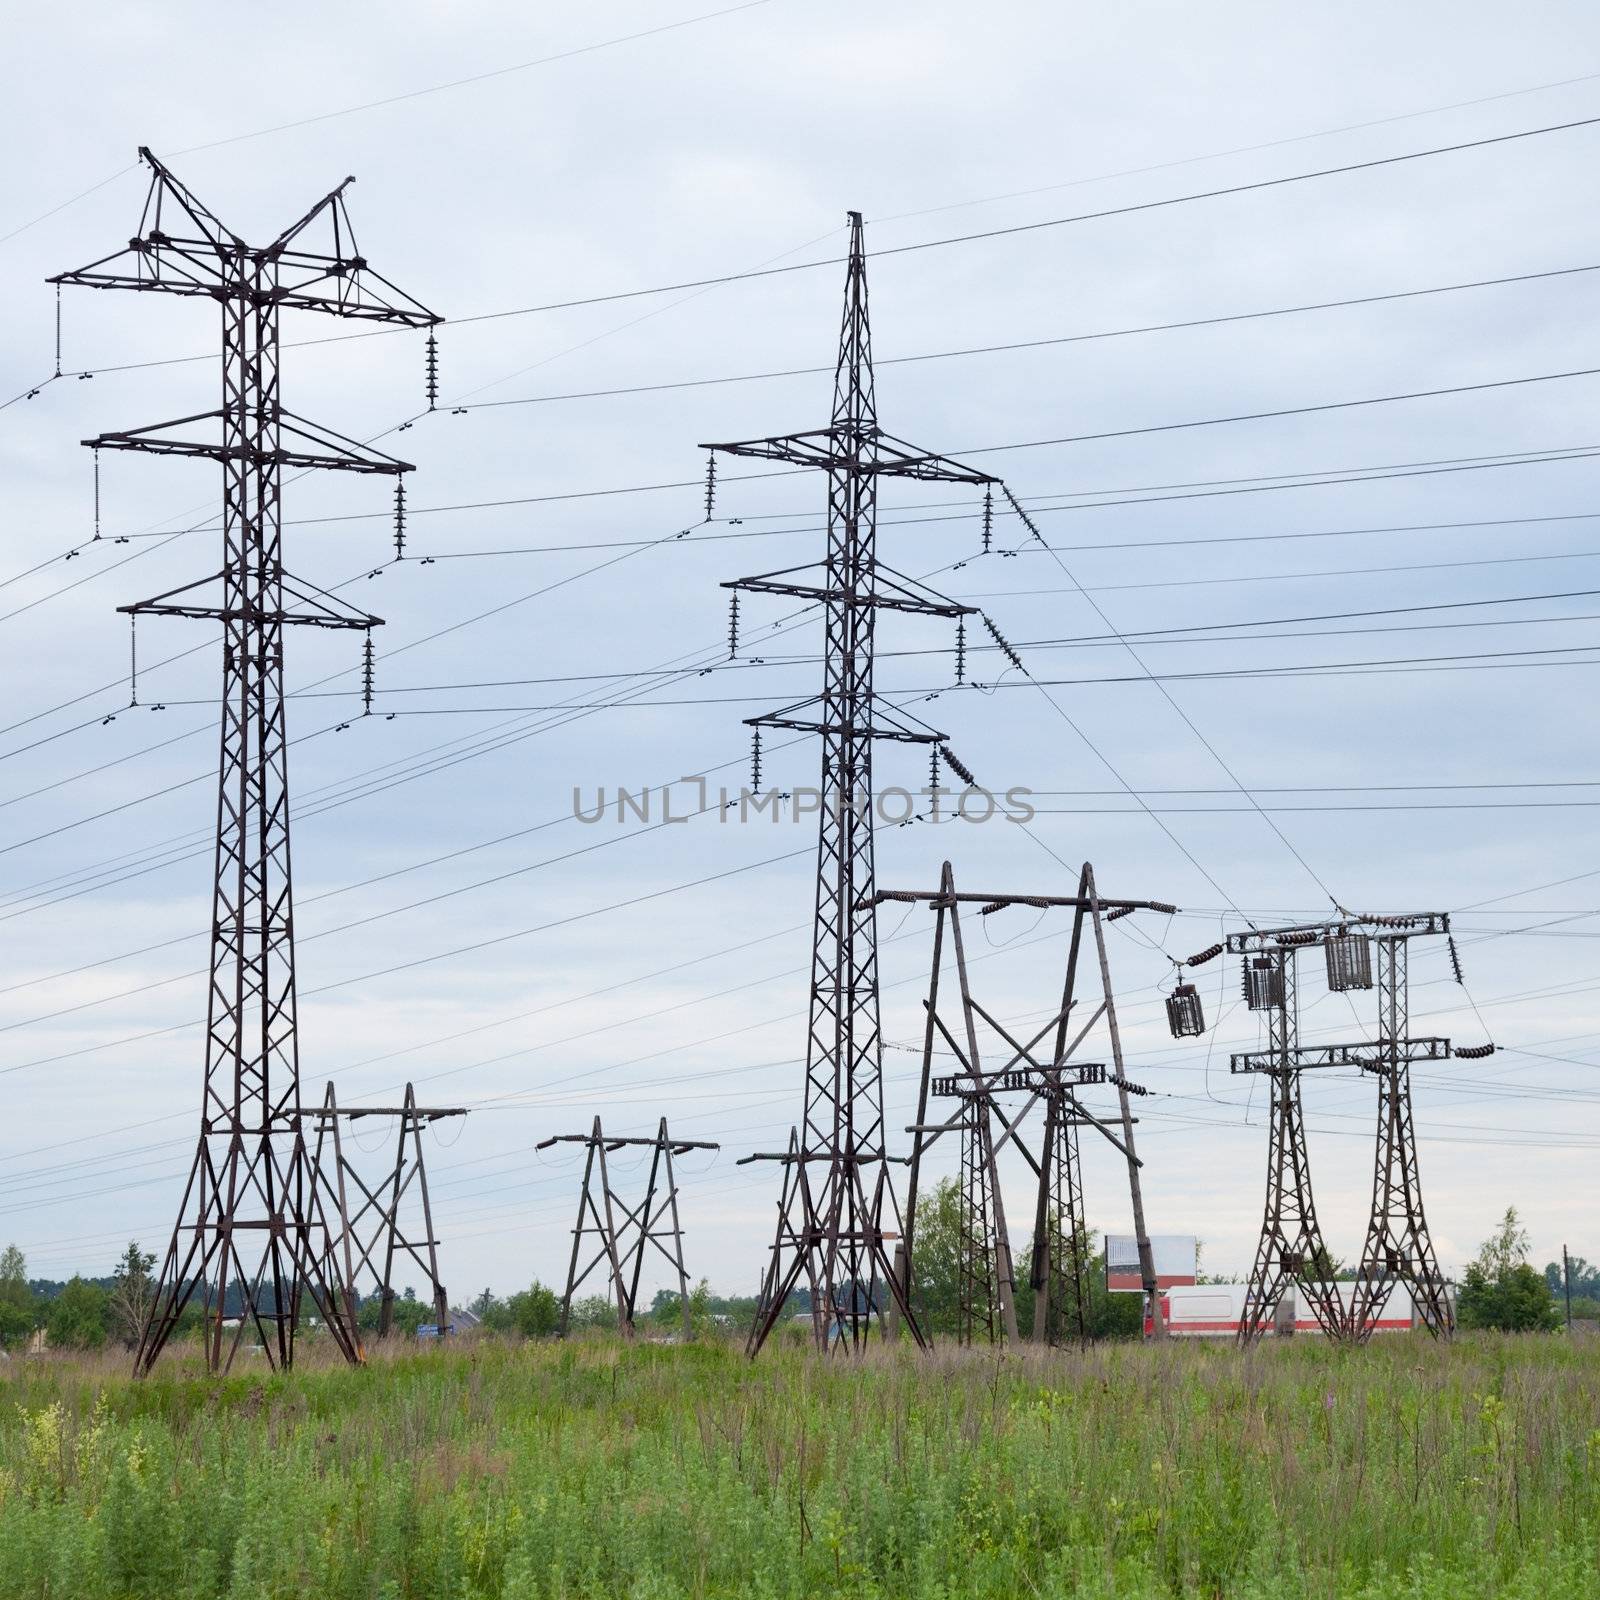 Several high-voltage transmission lines against the sky